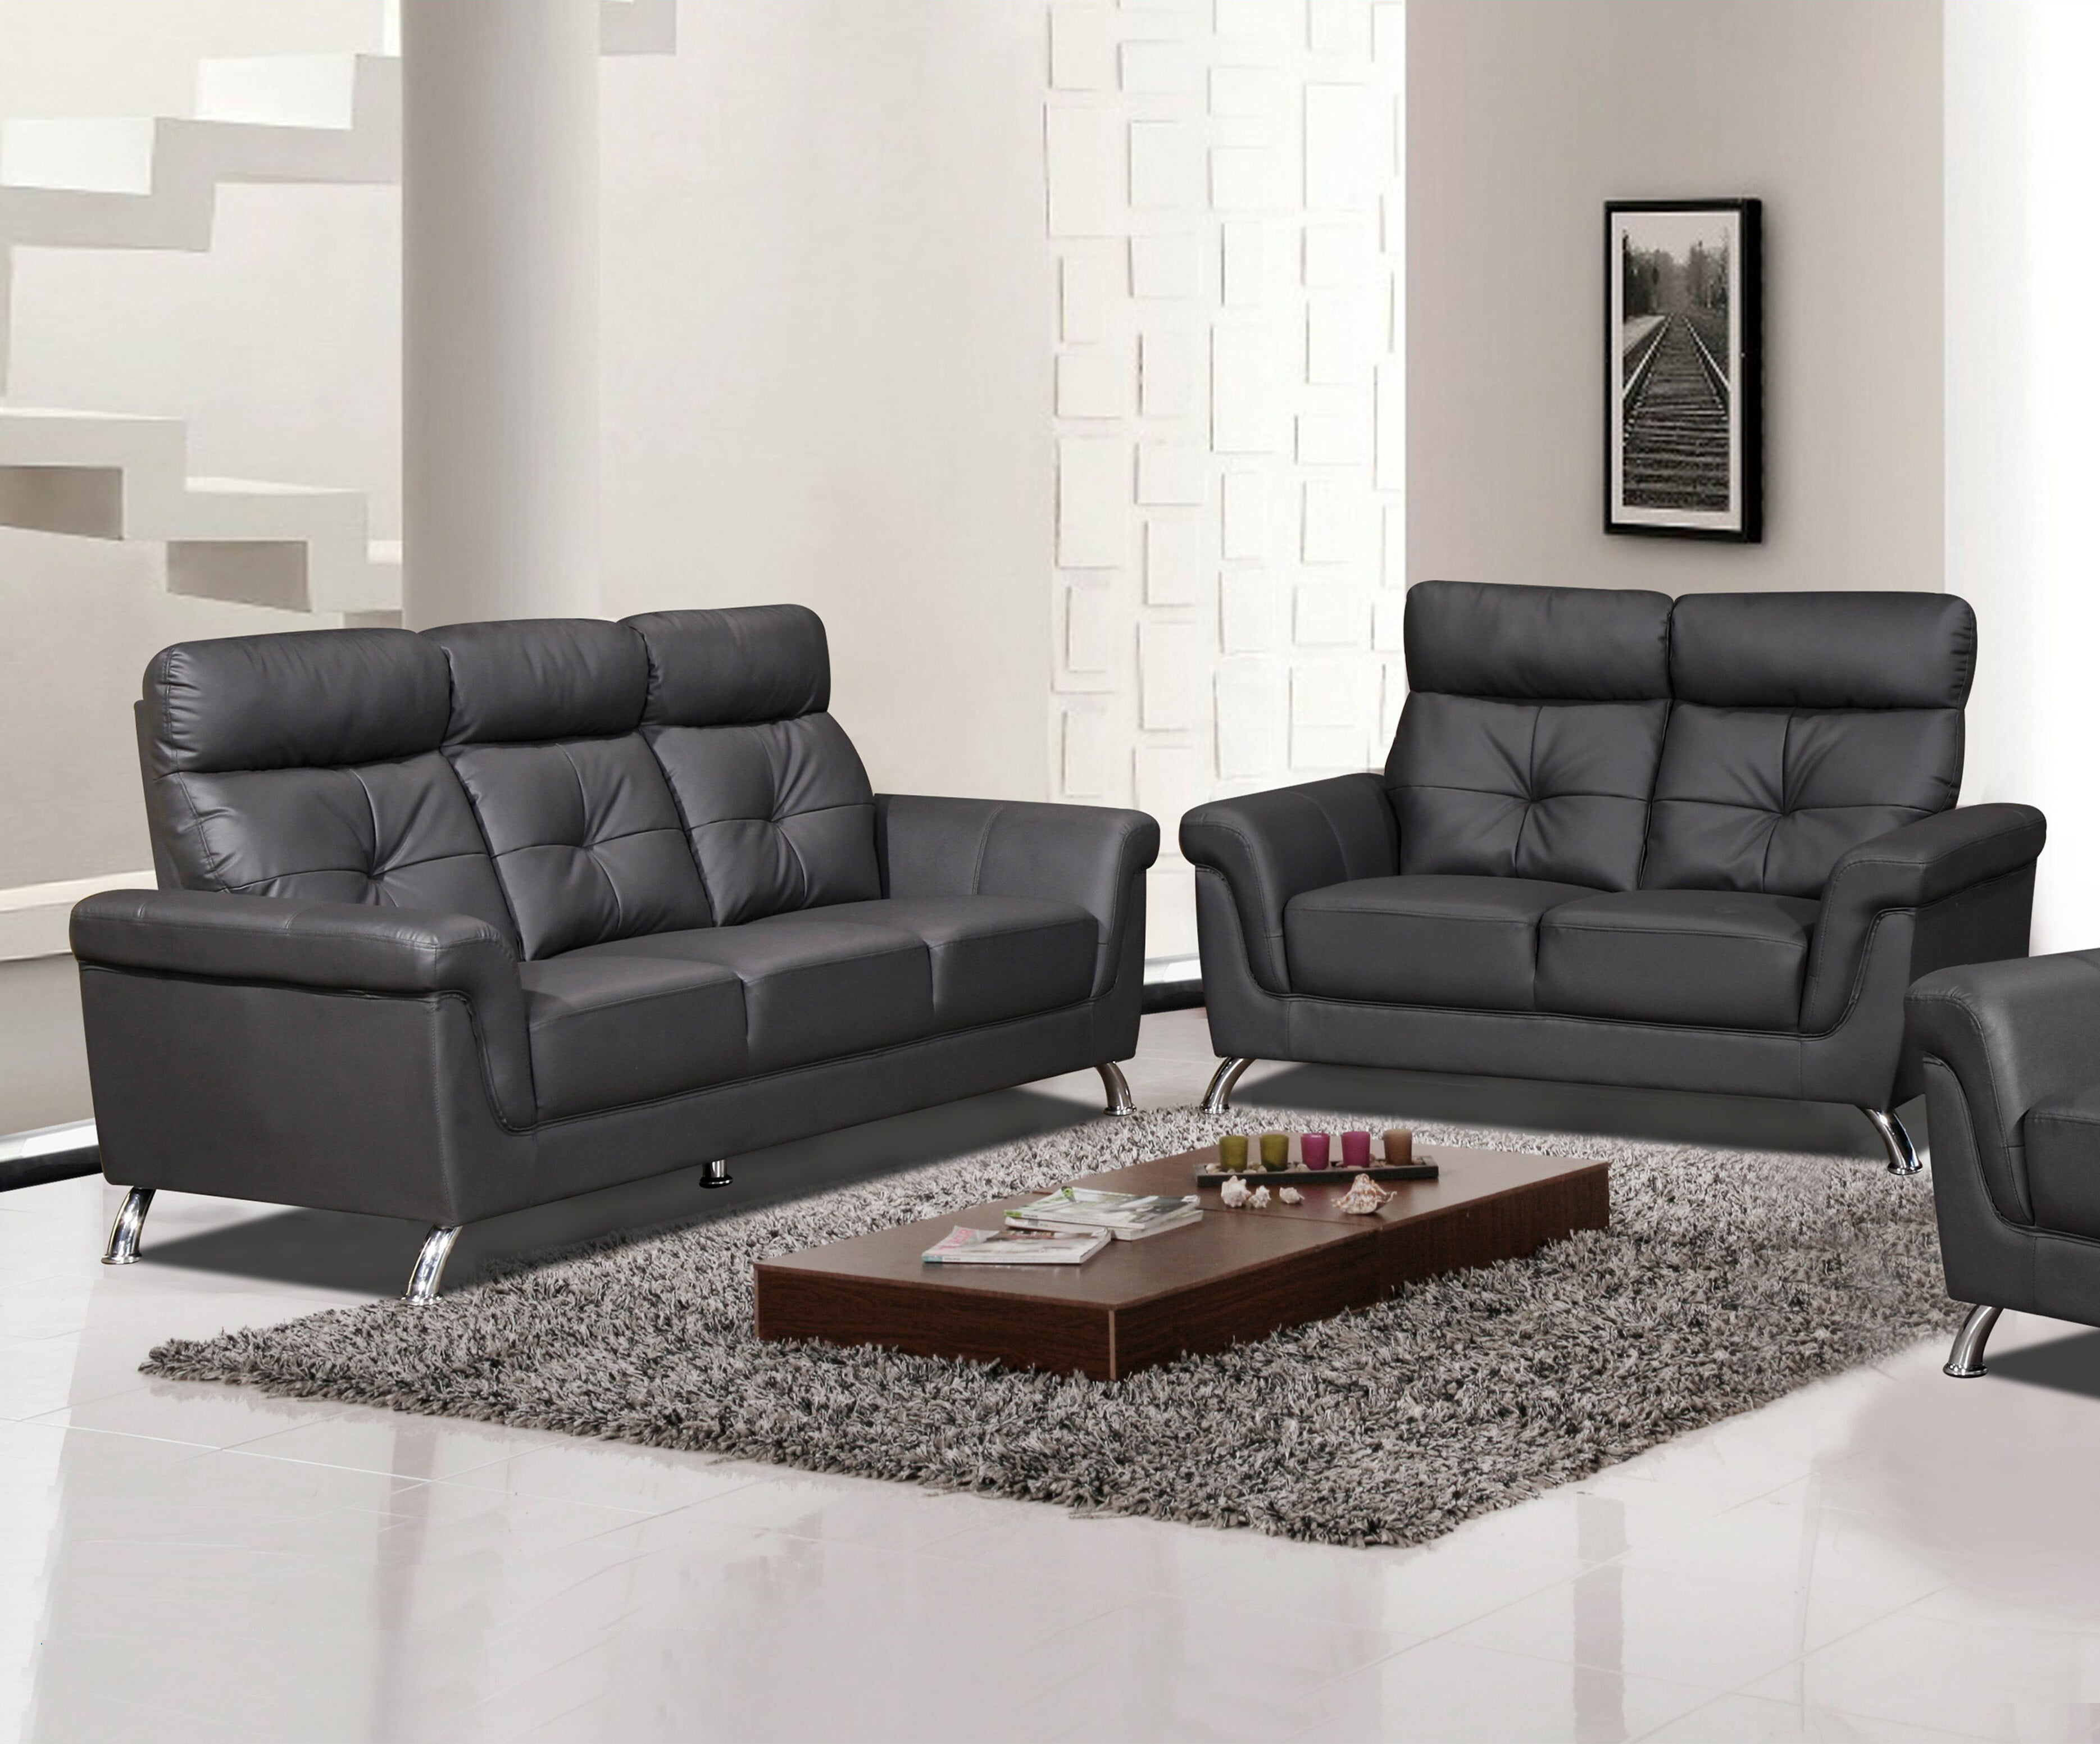 Beautiful Simple Classic Black Tufted Bonded leather Sofa